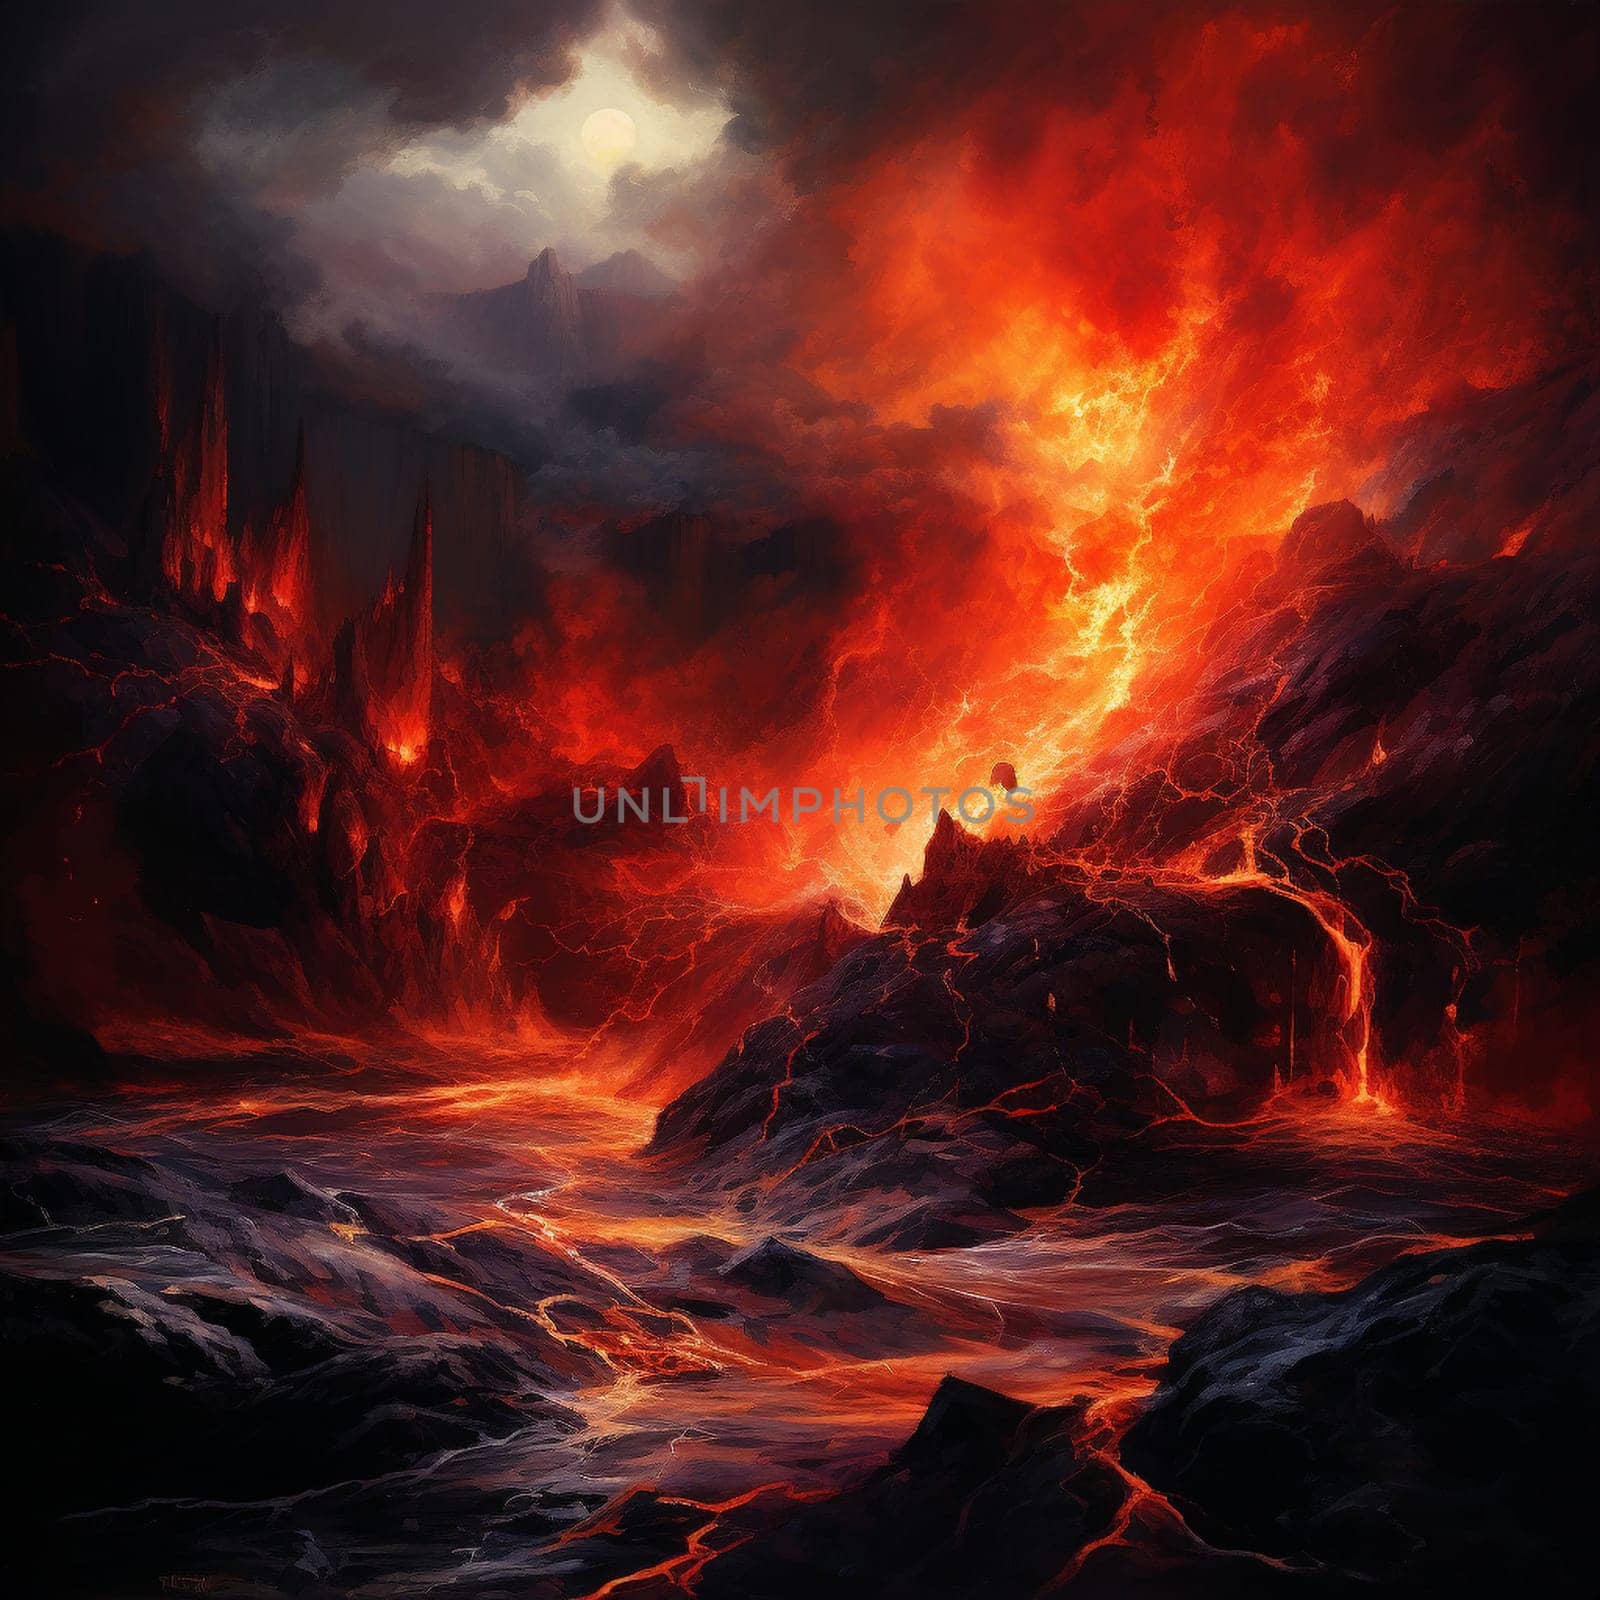 Eruption's Torrent by Sahin